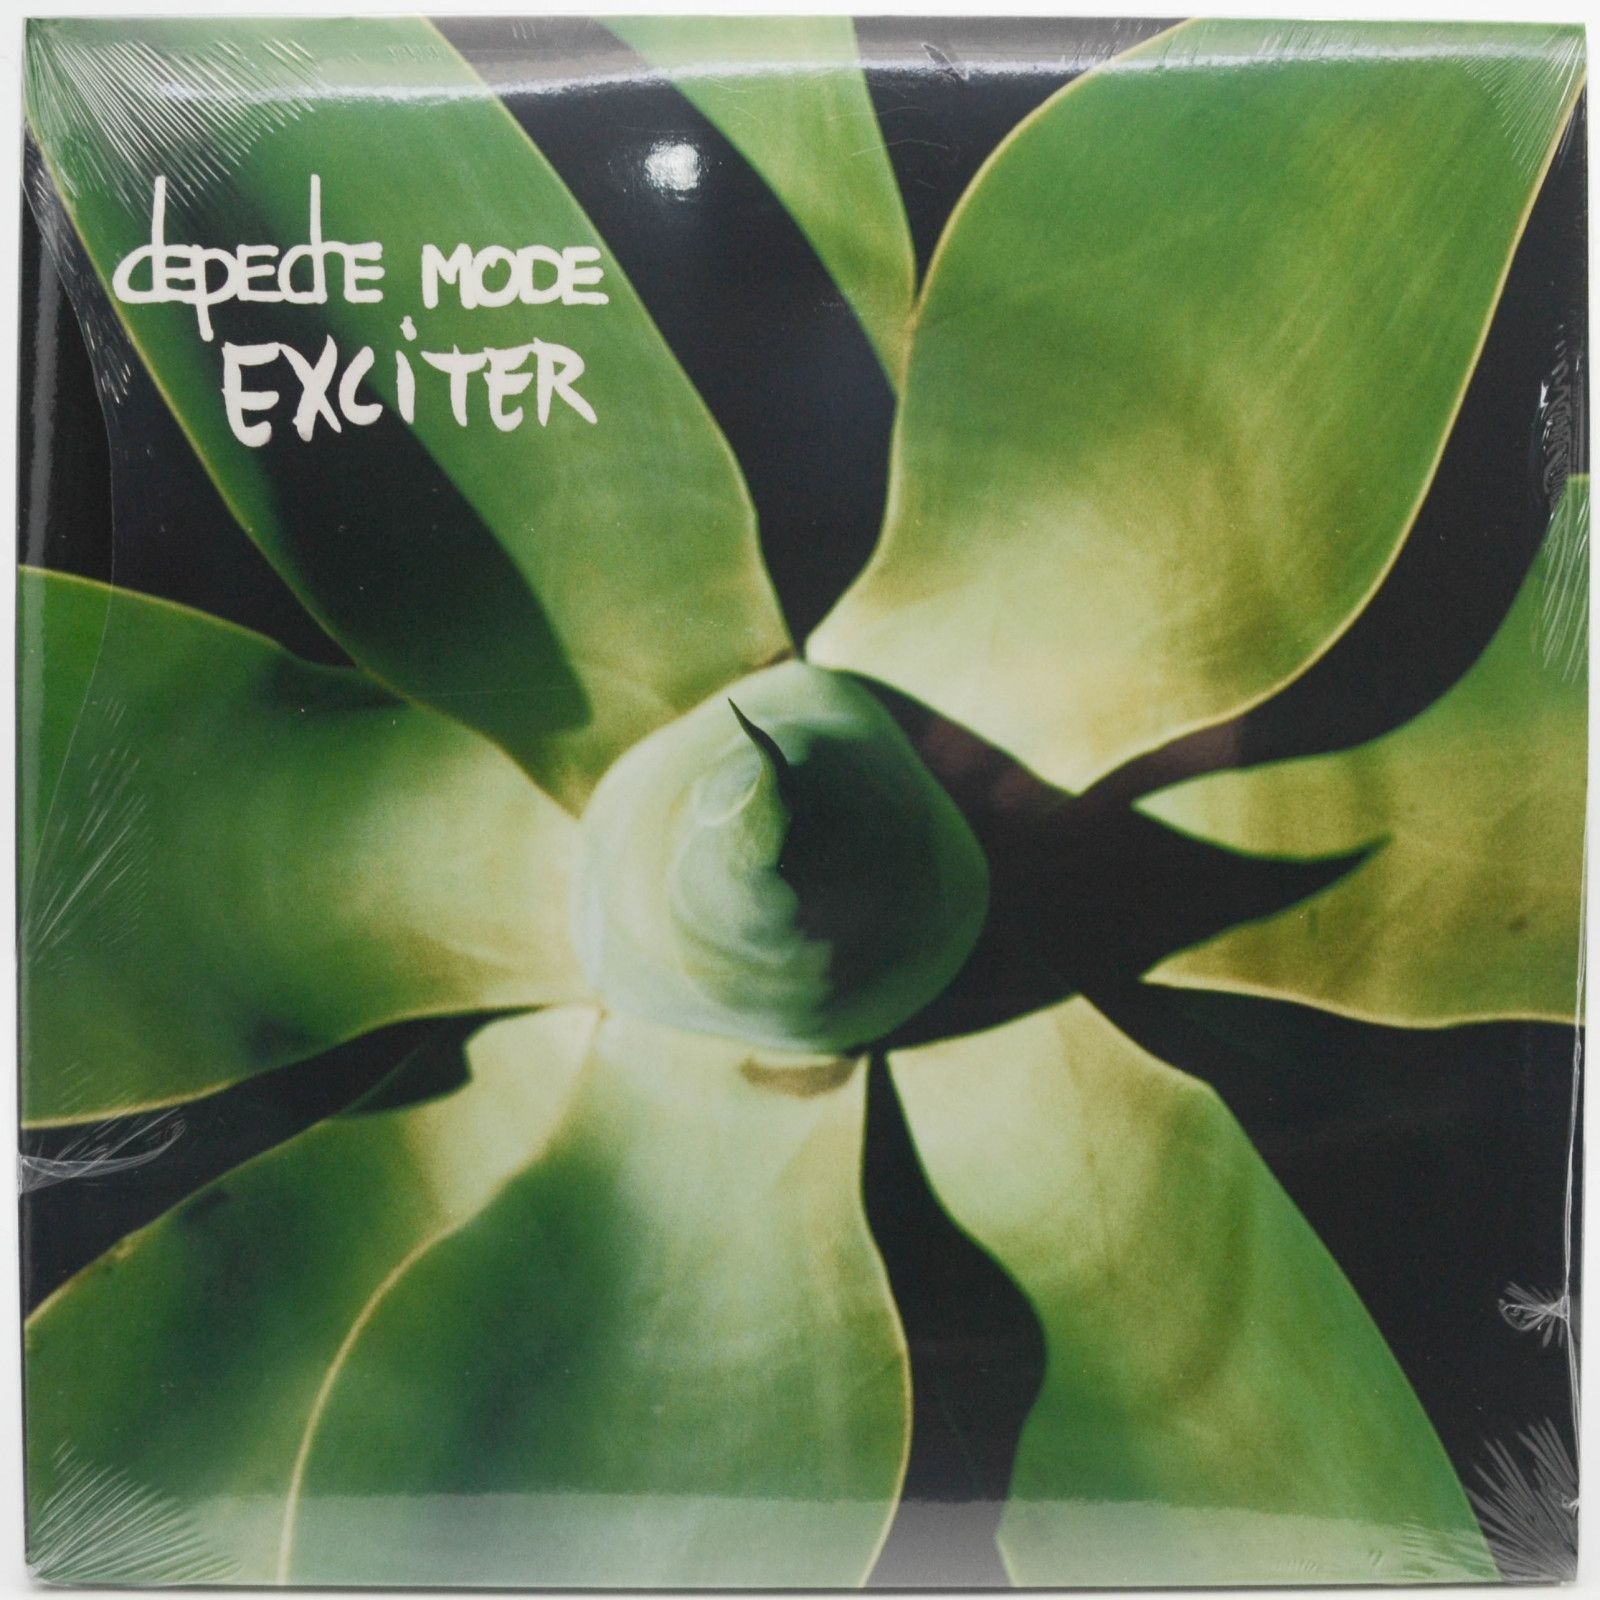 Depeche Mode — Exciter (2LP), 2001